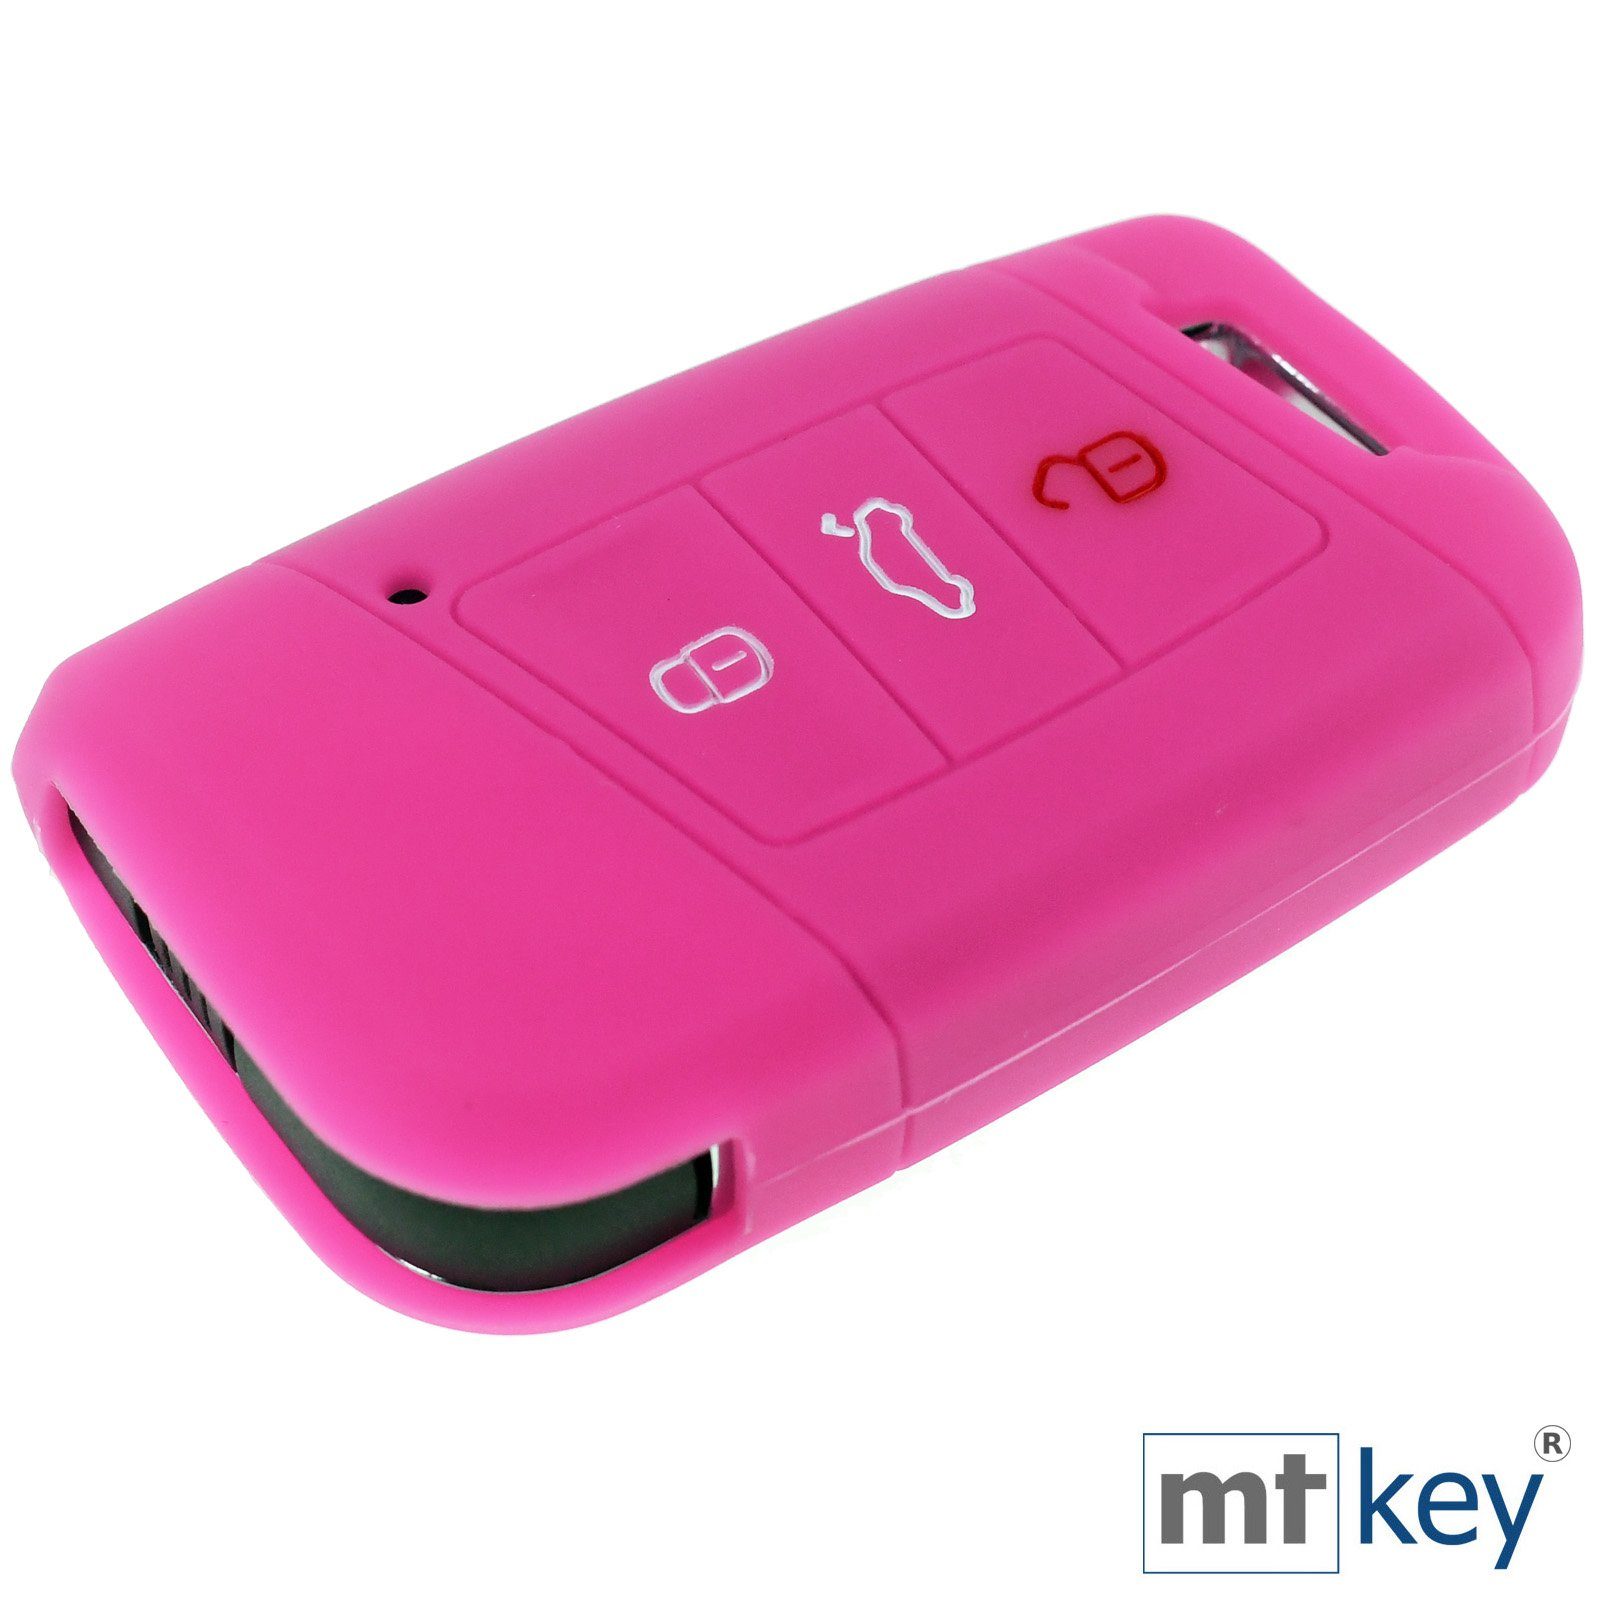 Pink, SMARTKEY für Schlüsseltasche B8 Passat Kodiaq mt-key KEYLESS Softcase 3 VW Tasten Arteon Autoschlüssel Skoda Schutzhülle Silikon